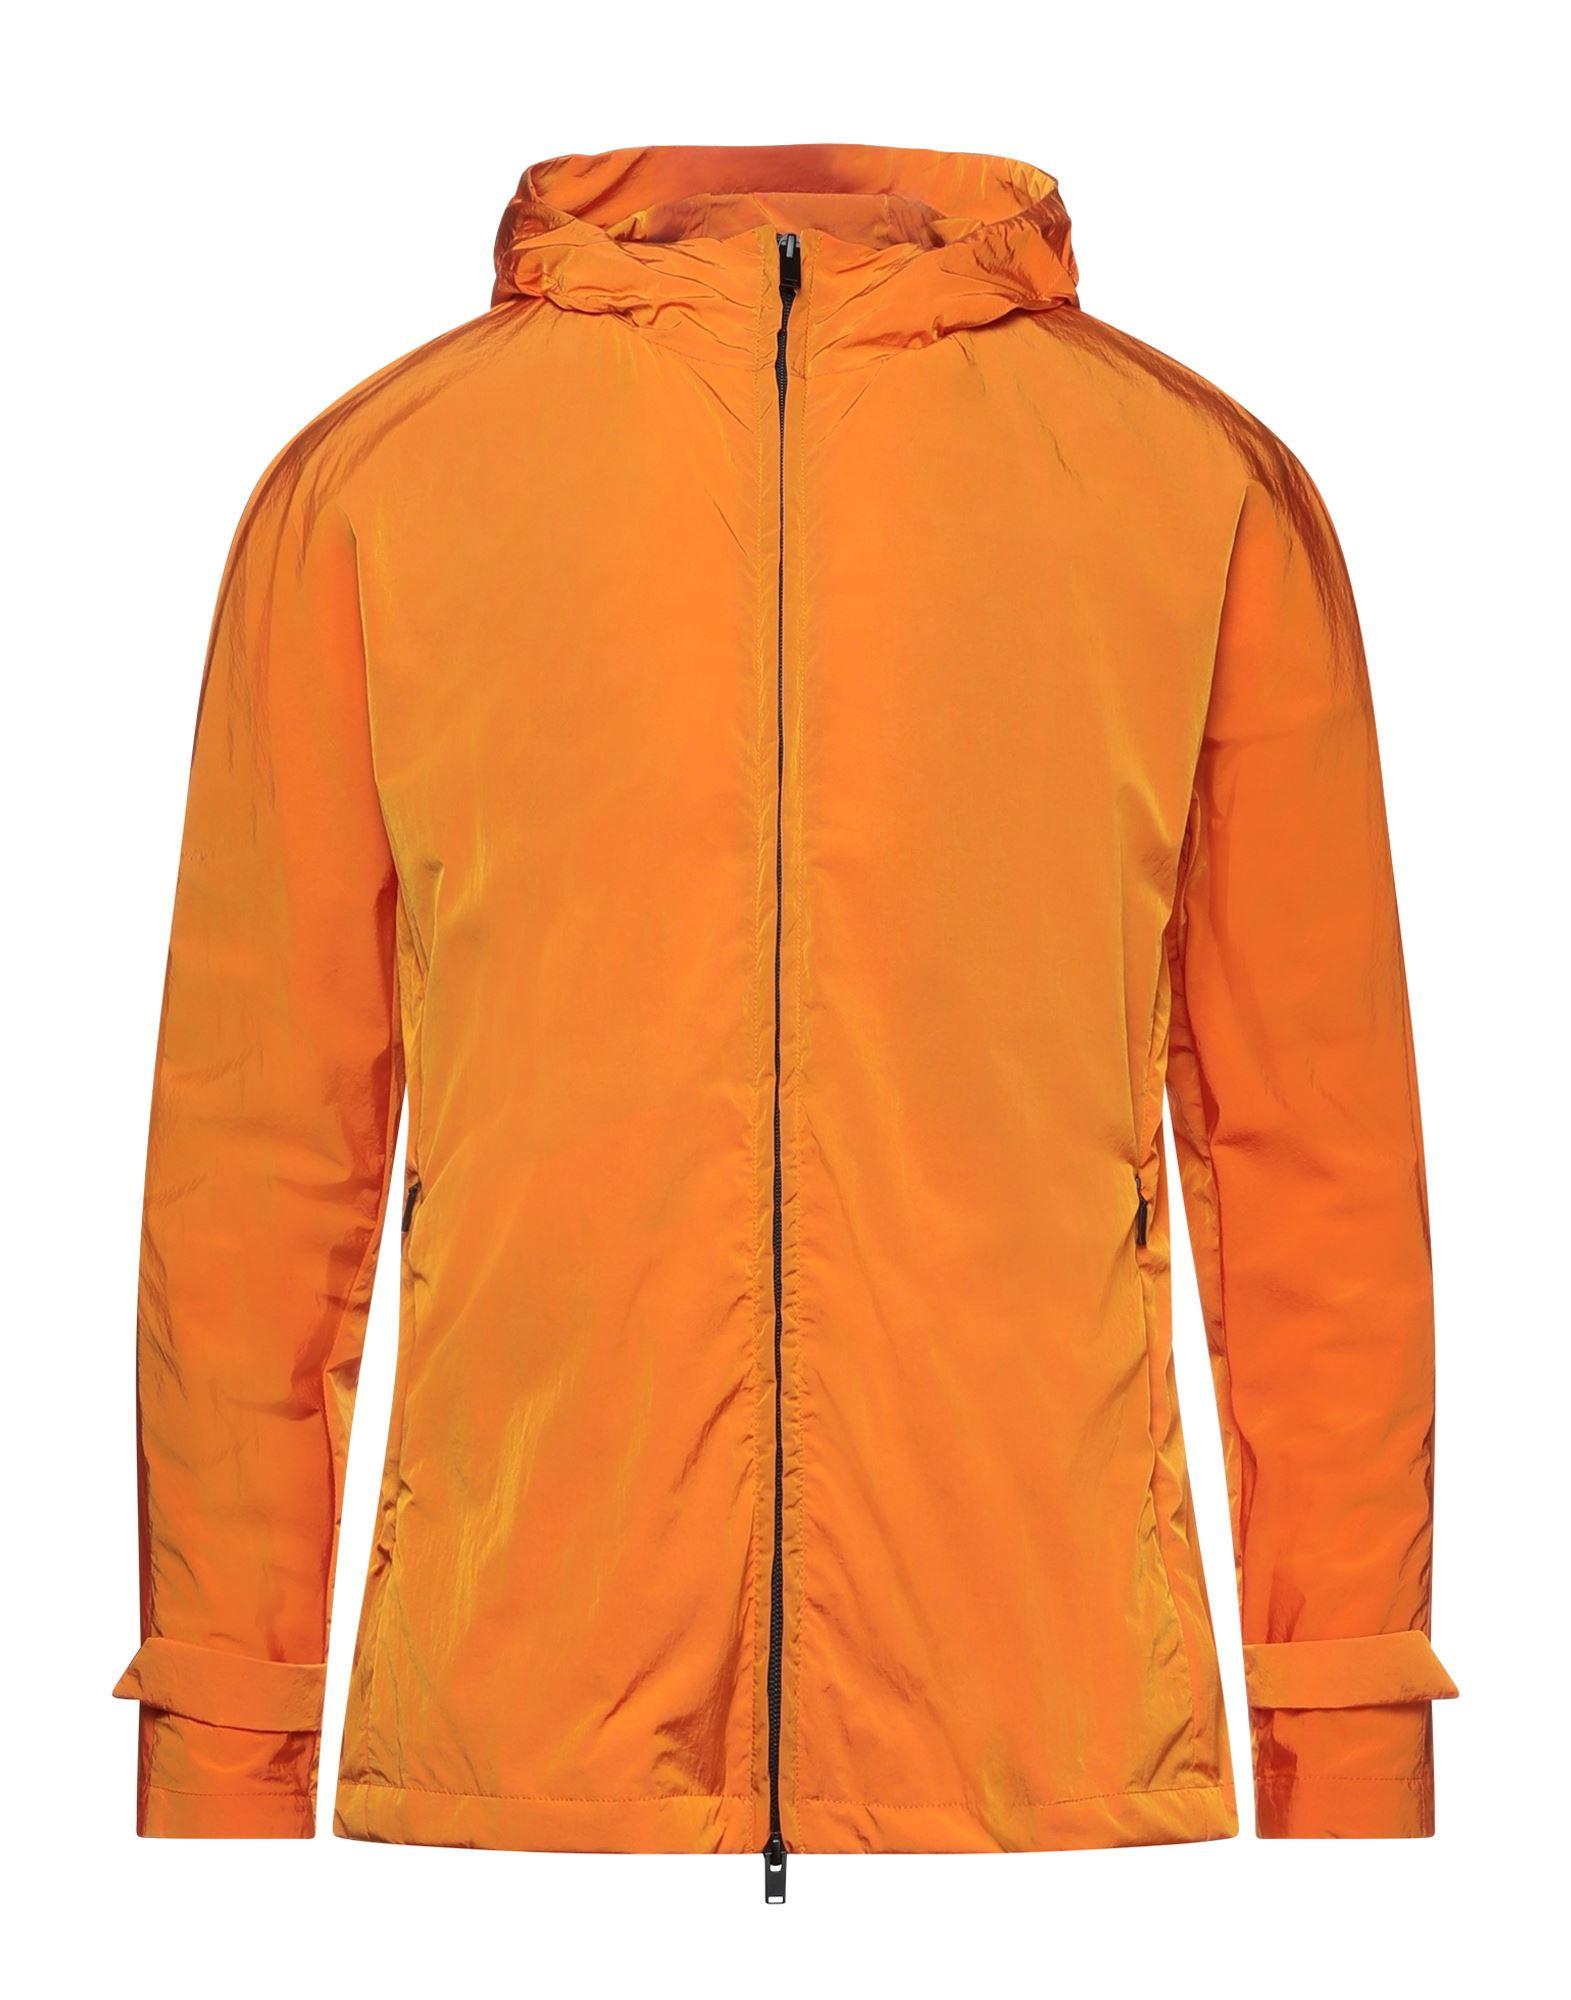 Hevò Overcoat in Orange for Men - Lyst